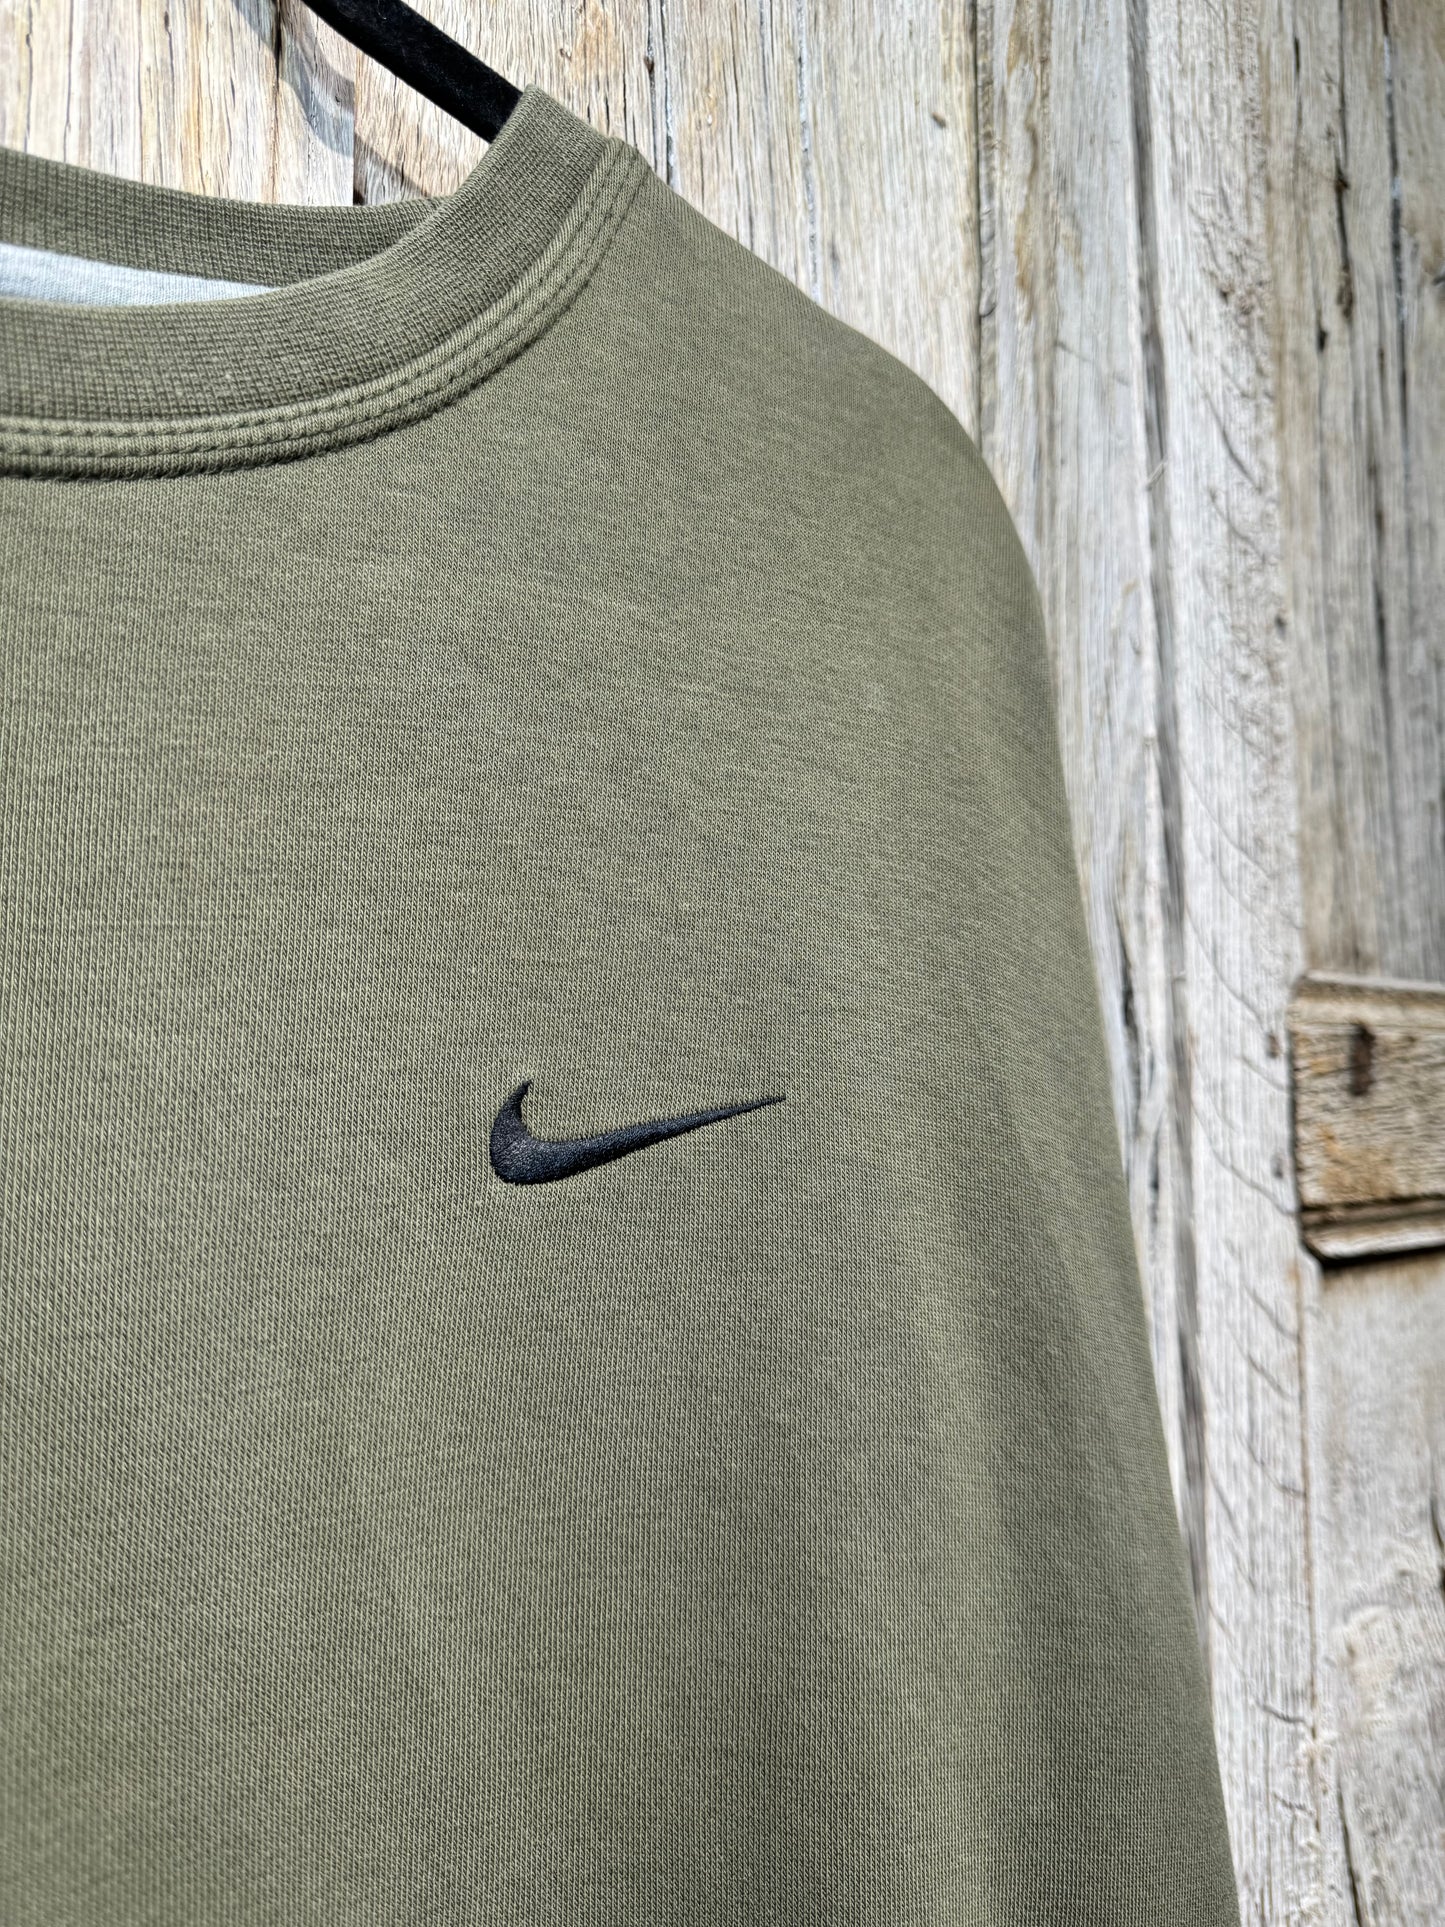 Vintage Khaki Nike Sweatshirt